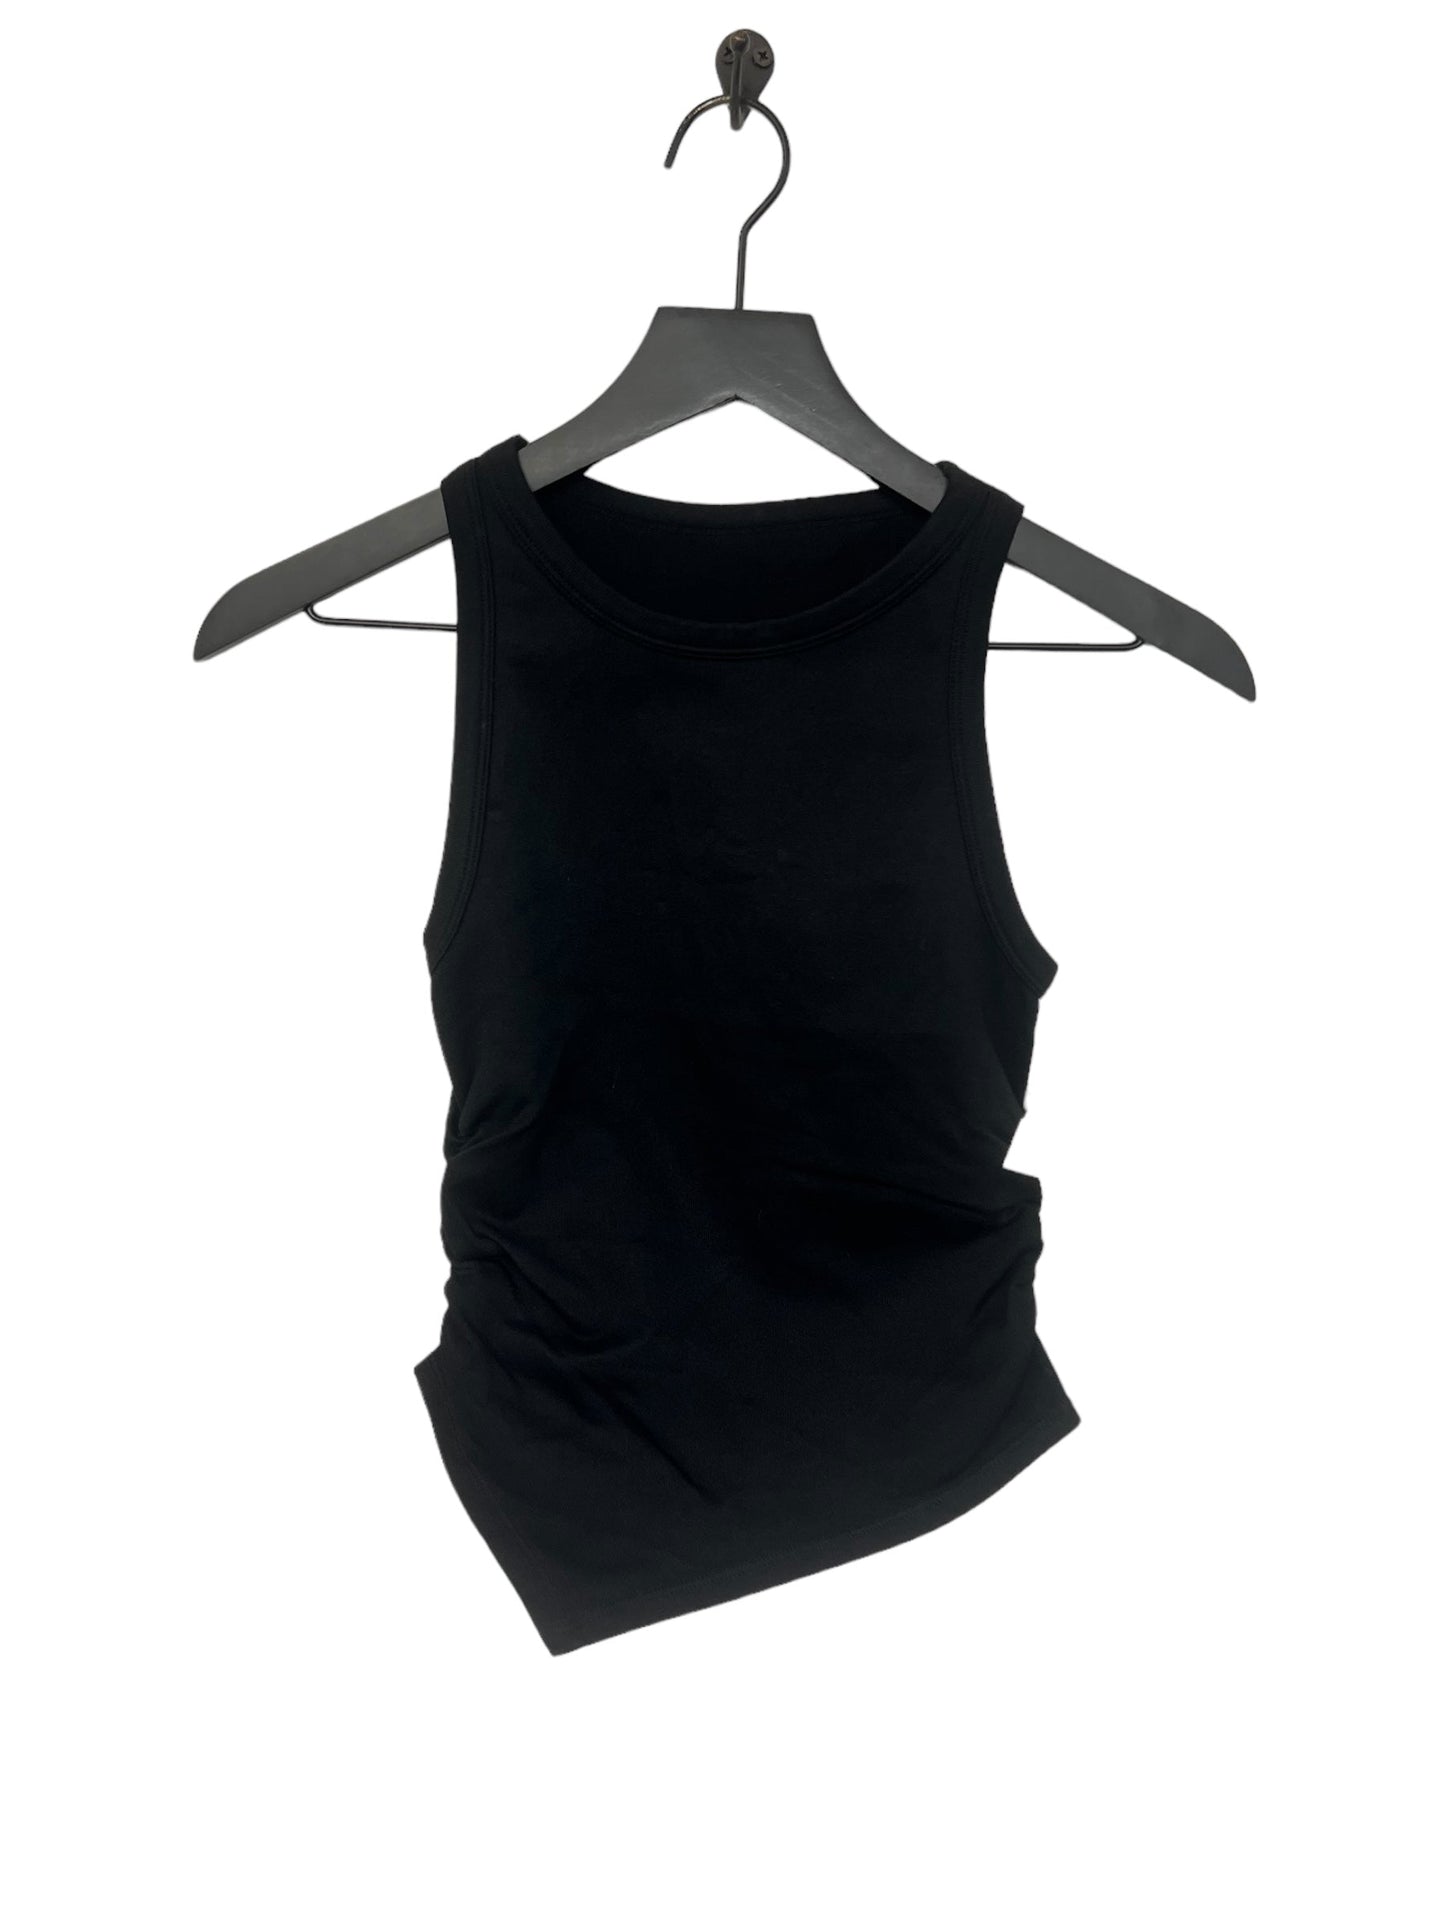 Black Top Sleeveless Clothes Mentor, Size S